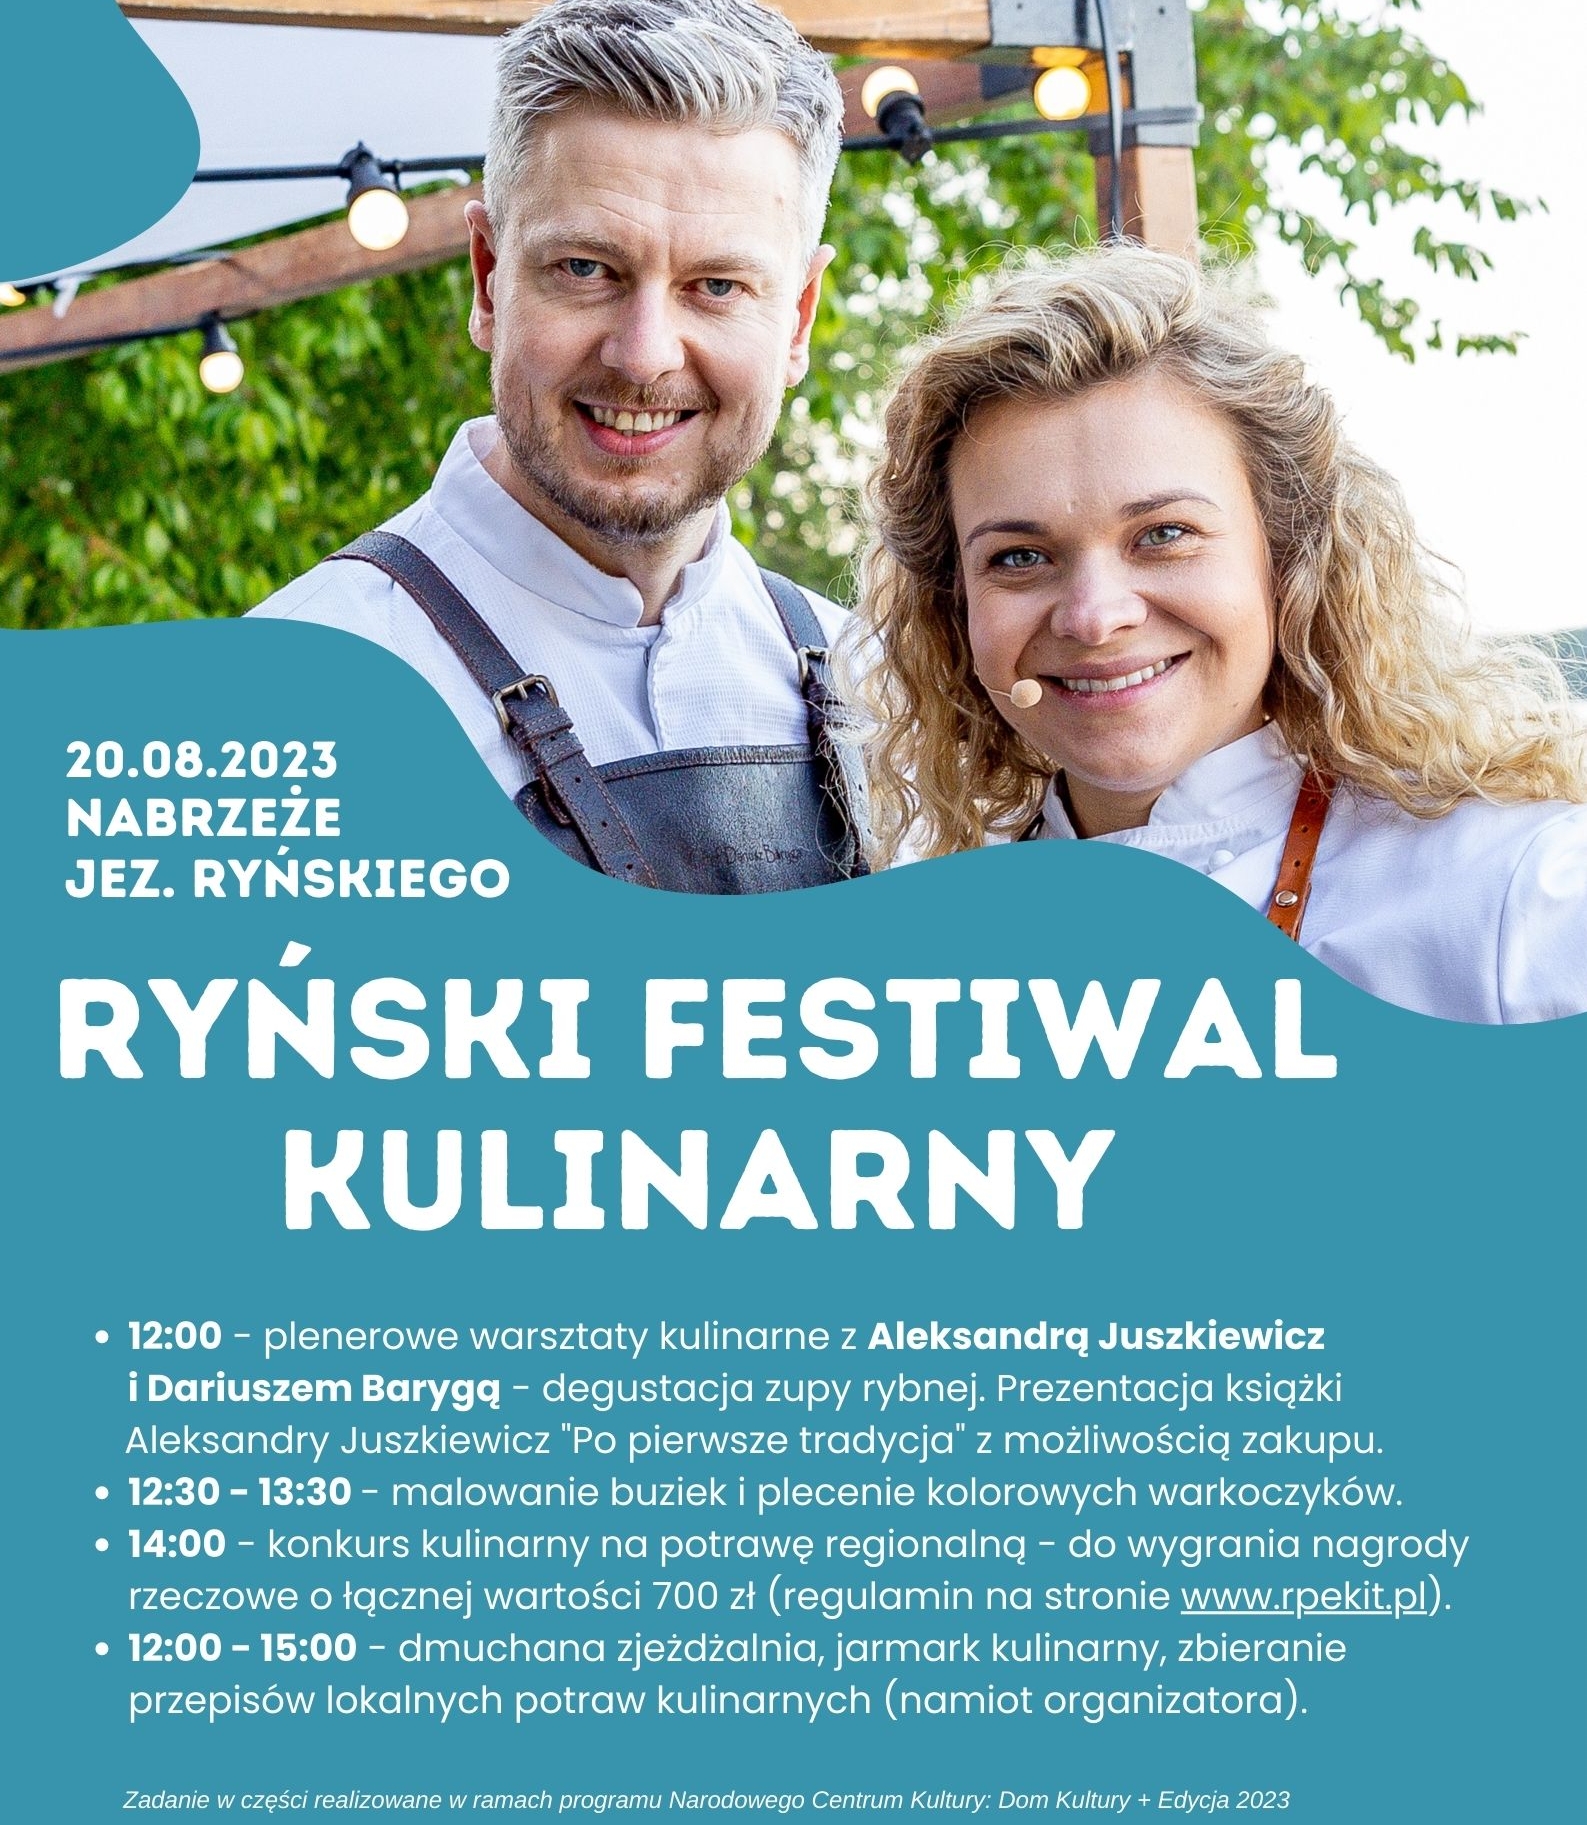 Ryn na Mazurach zaprasza na koncert i festiwal kulinarny